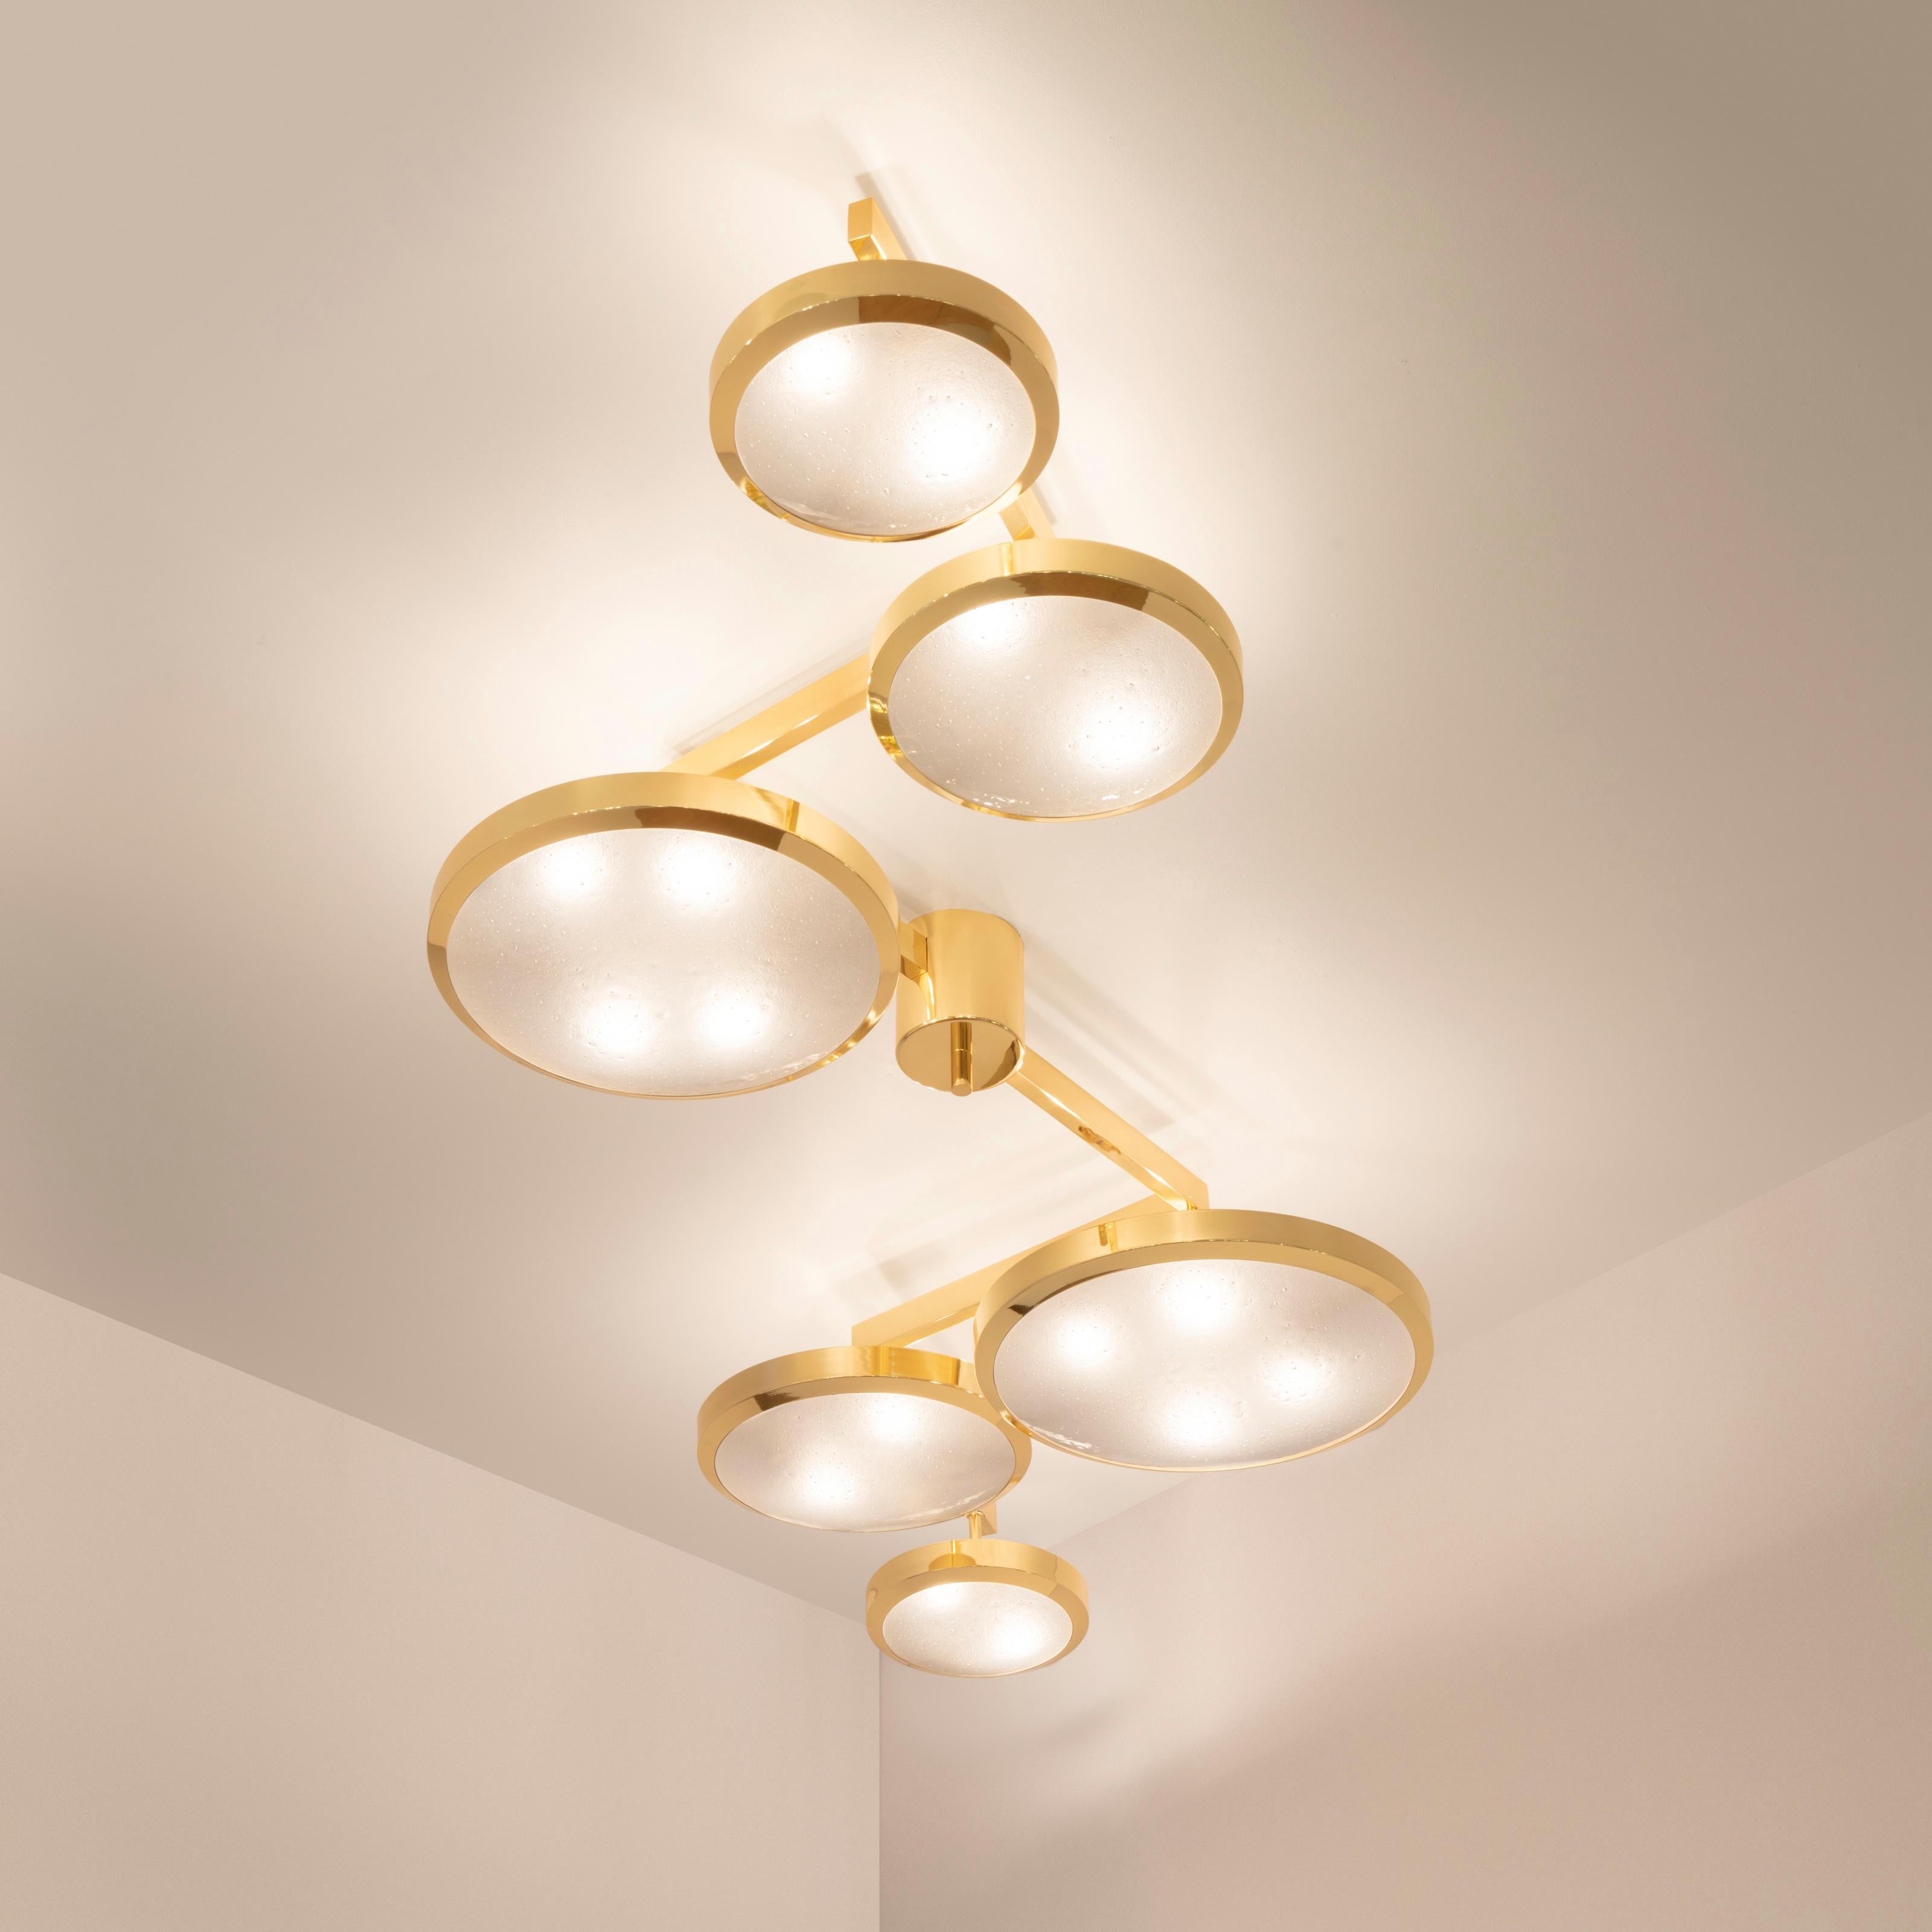 Geometria Sospesa Ceiling Light by Gaspare Asaro - Polished Brass For Sale 11